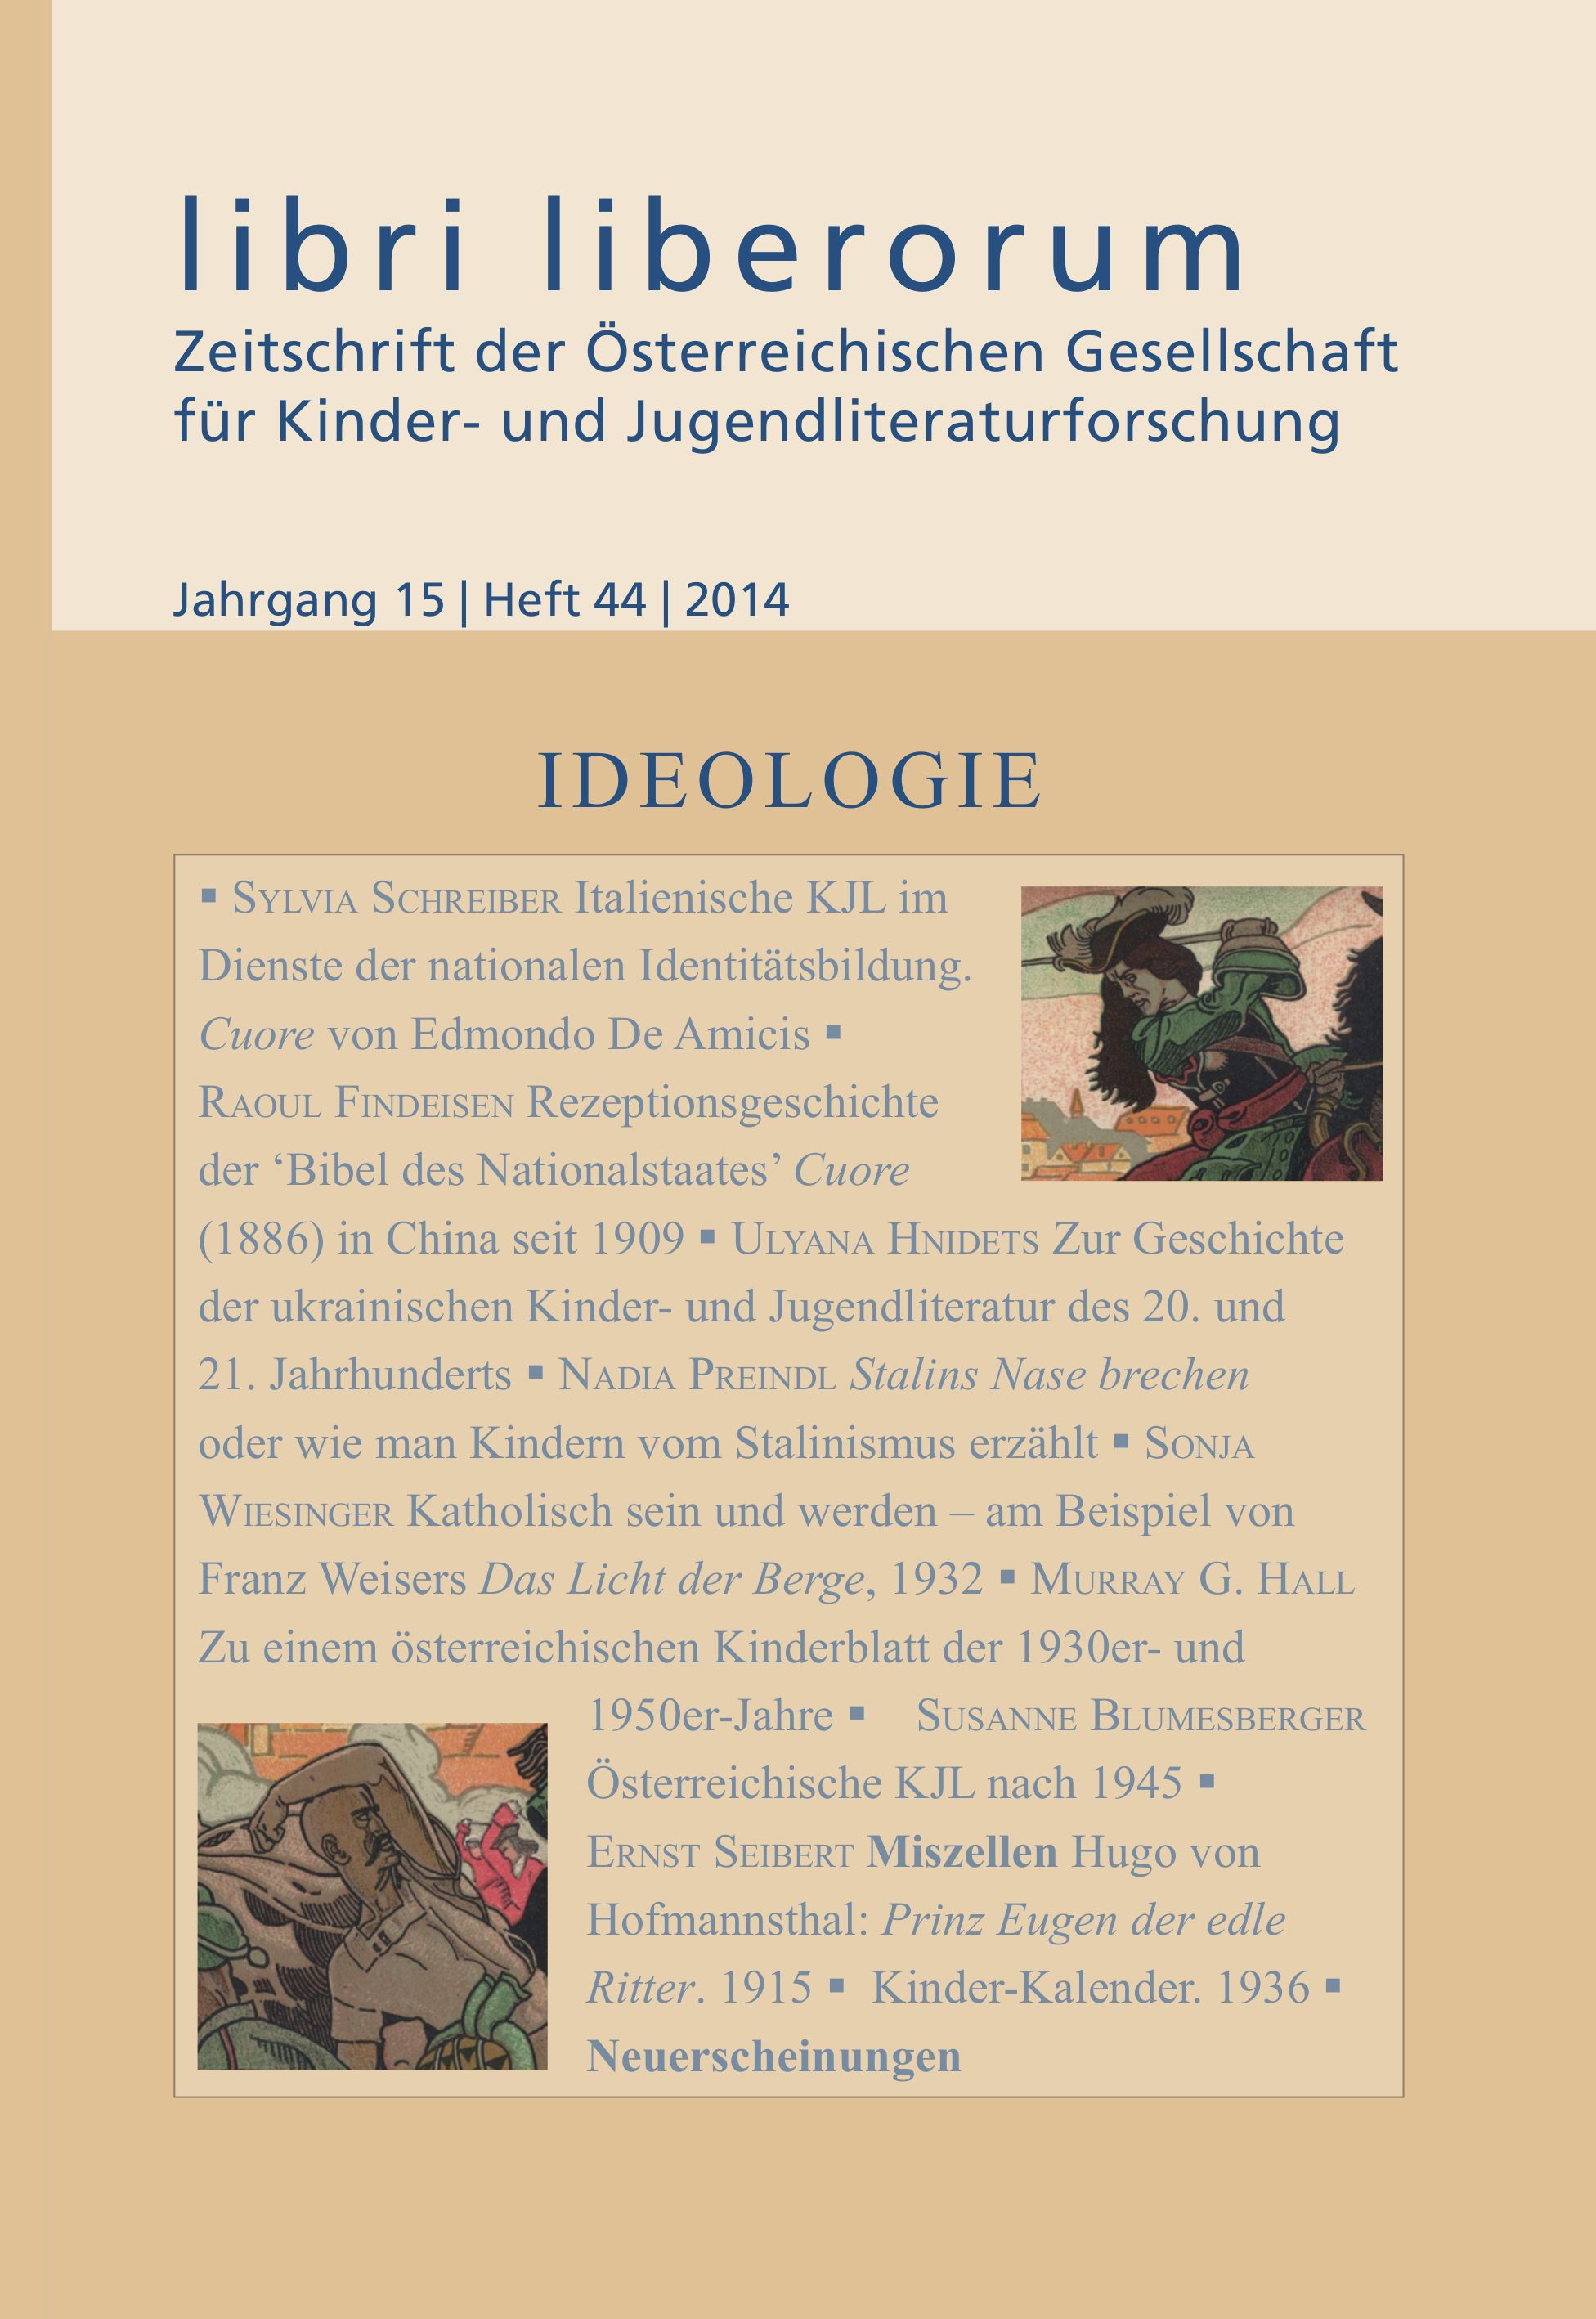 					Ansehen libri liberorum (Jahrgang 15/Heft 44/2014)
				